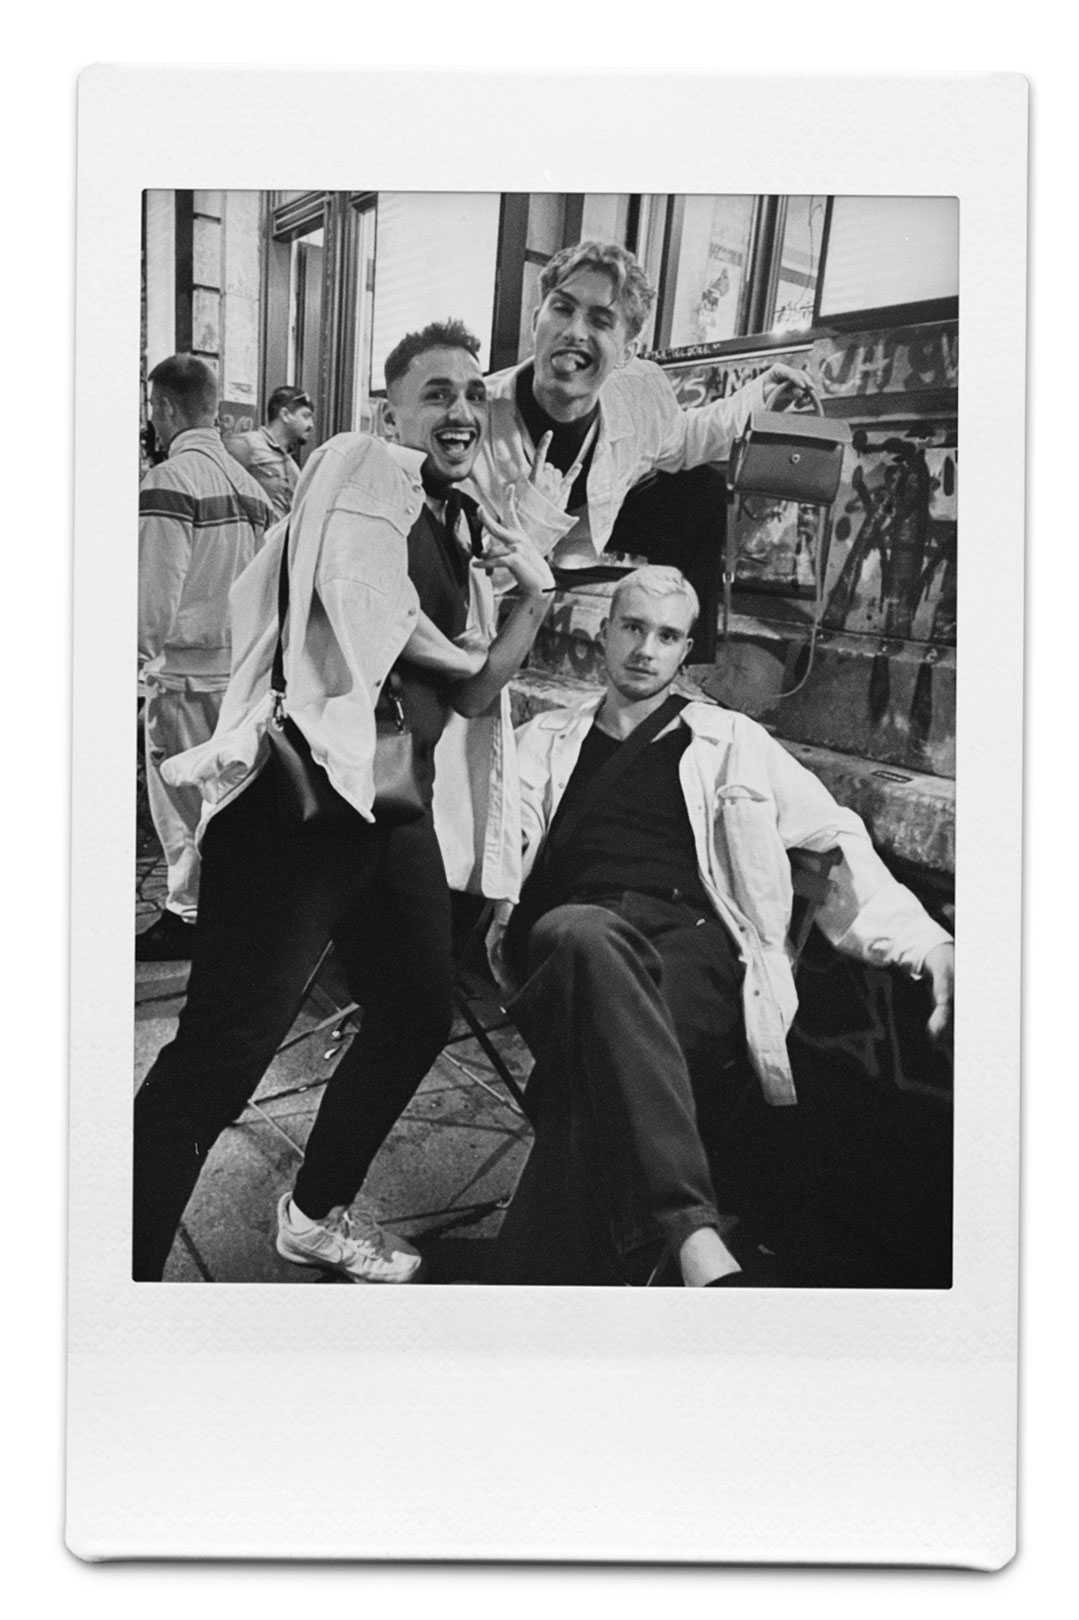 Polaroid von Freunden: Konrad, Ditjon und Mister Matthew.